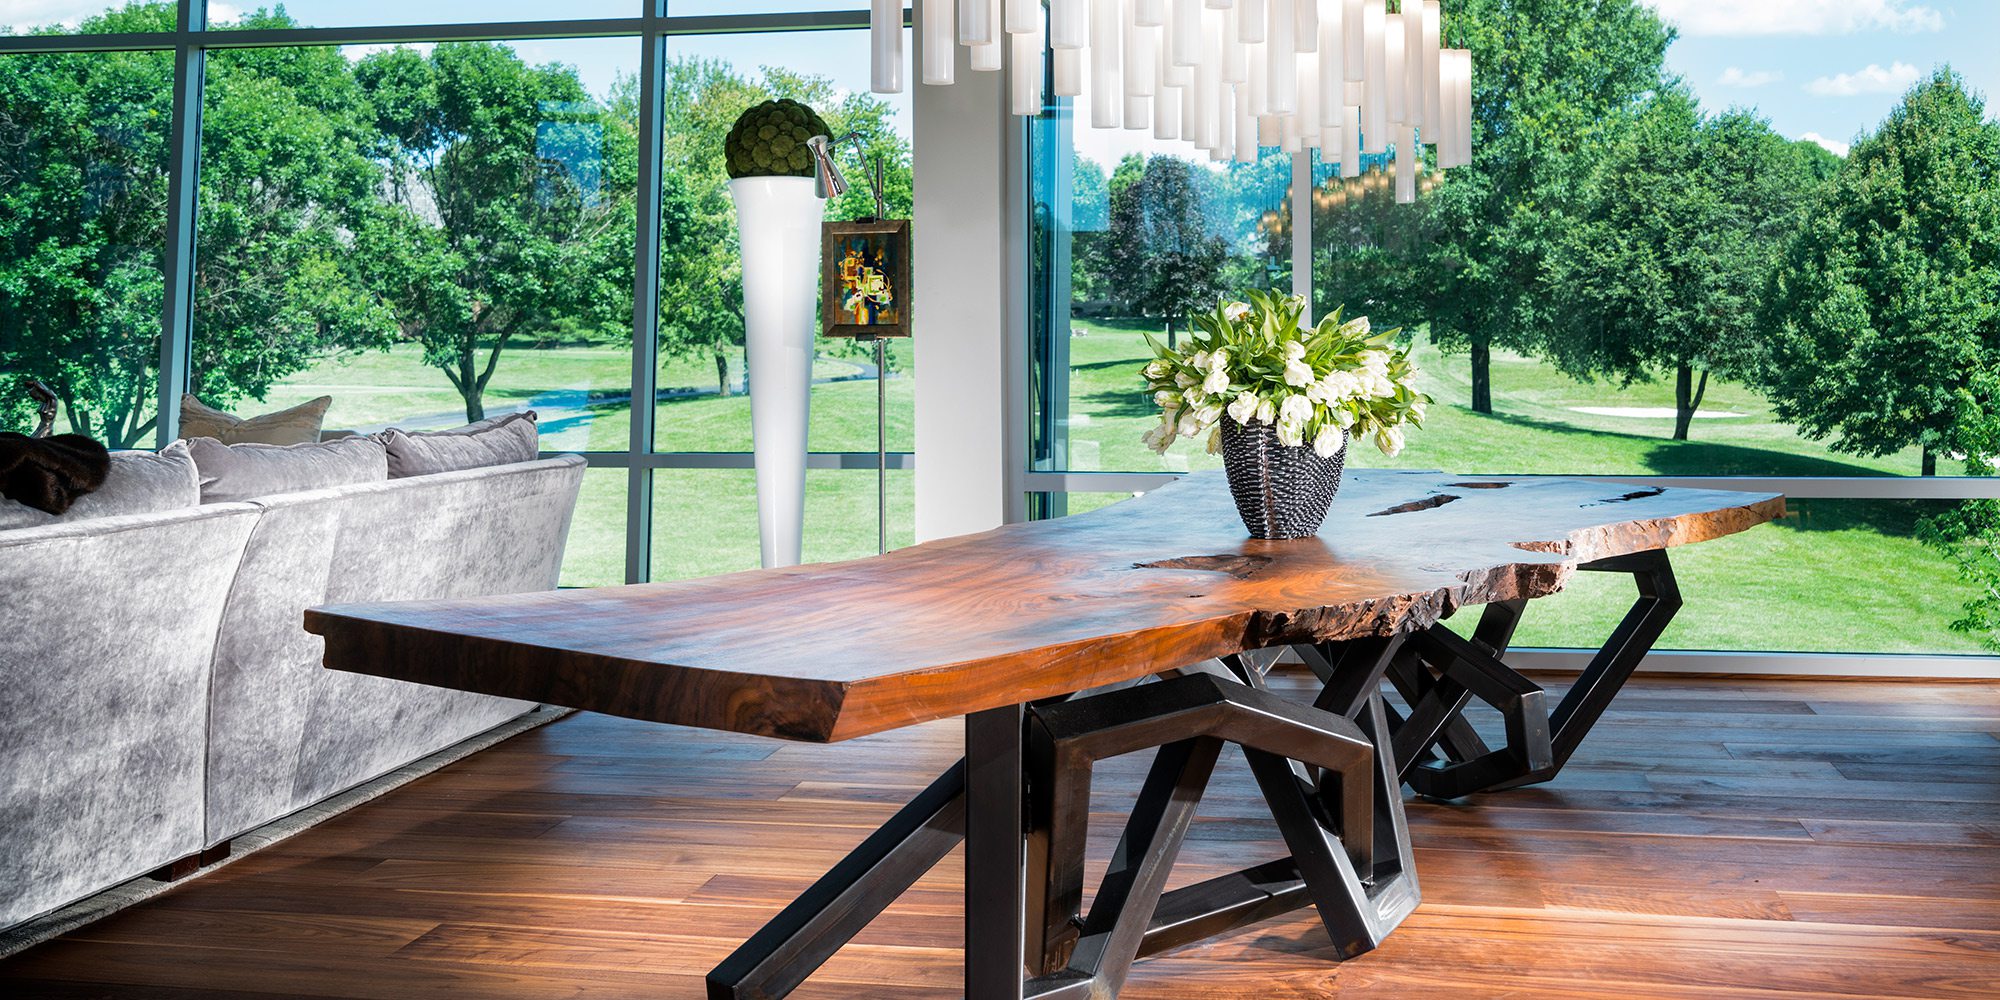 417 Home Design Awards 2019 Winner of Best Dining Room by Obelisk Home Springfield MO